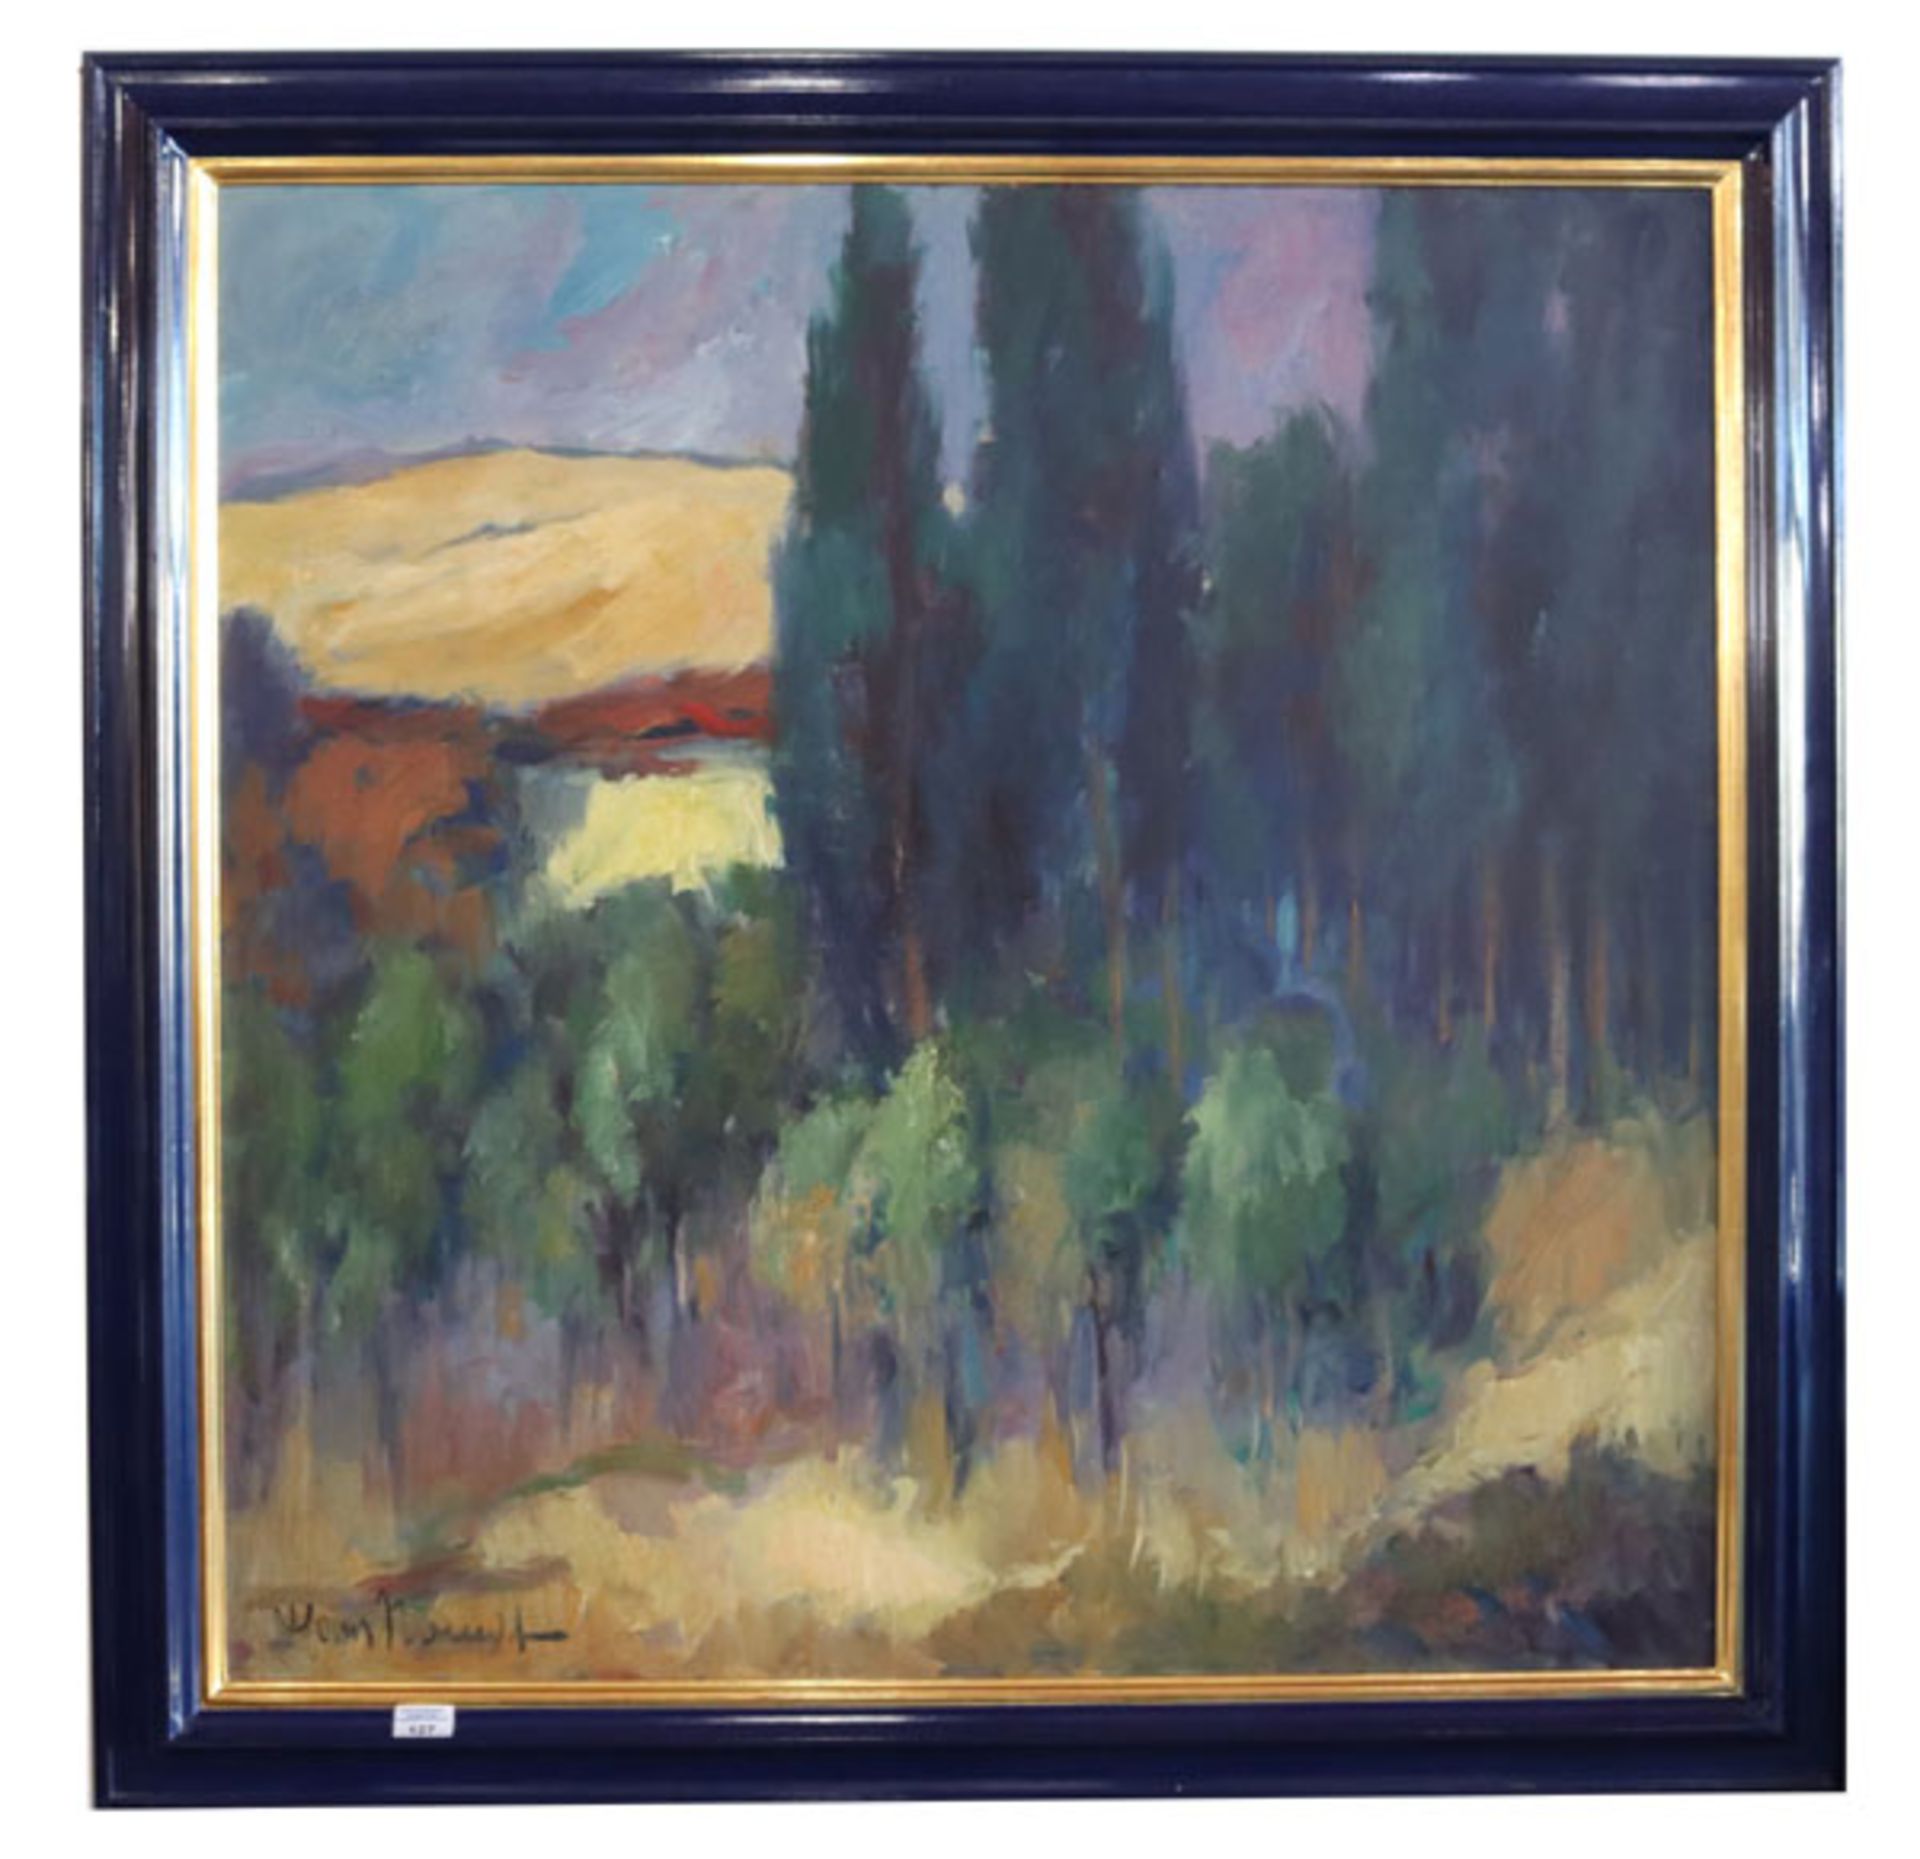 Gemälde ÖL/LW 'Hügelige Landschaft', signiert Hans Nowak, * 1922 Halle/Saale + 1996 Voigtholz,